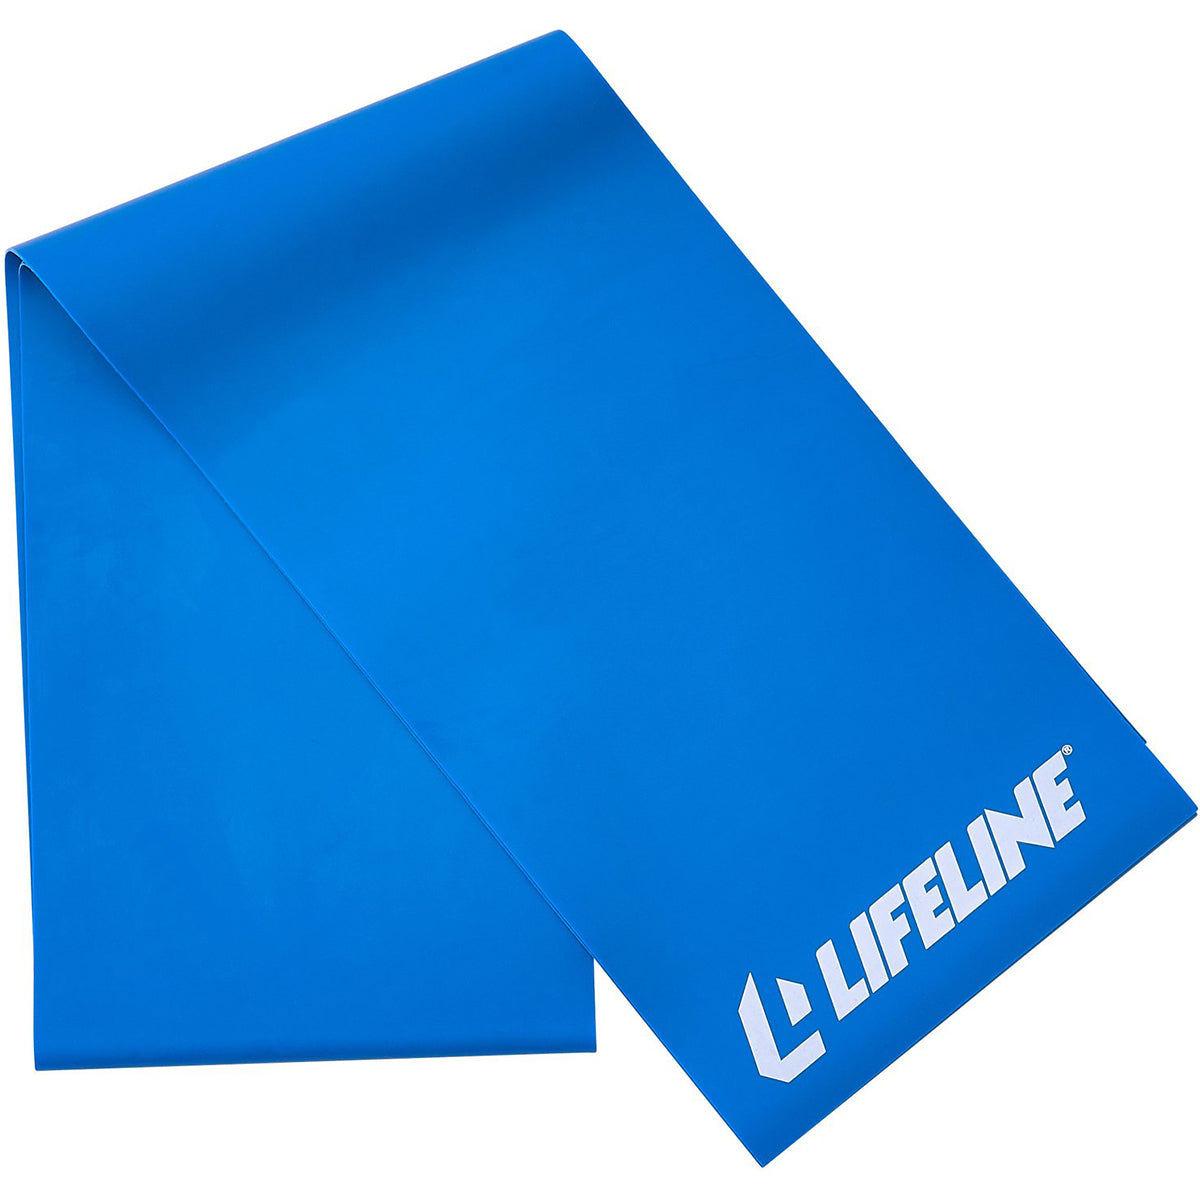 Lifeline USA Flat Resistance Band Lifeline USA